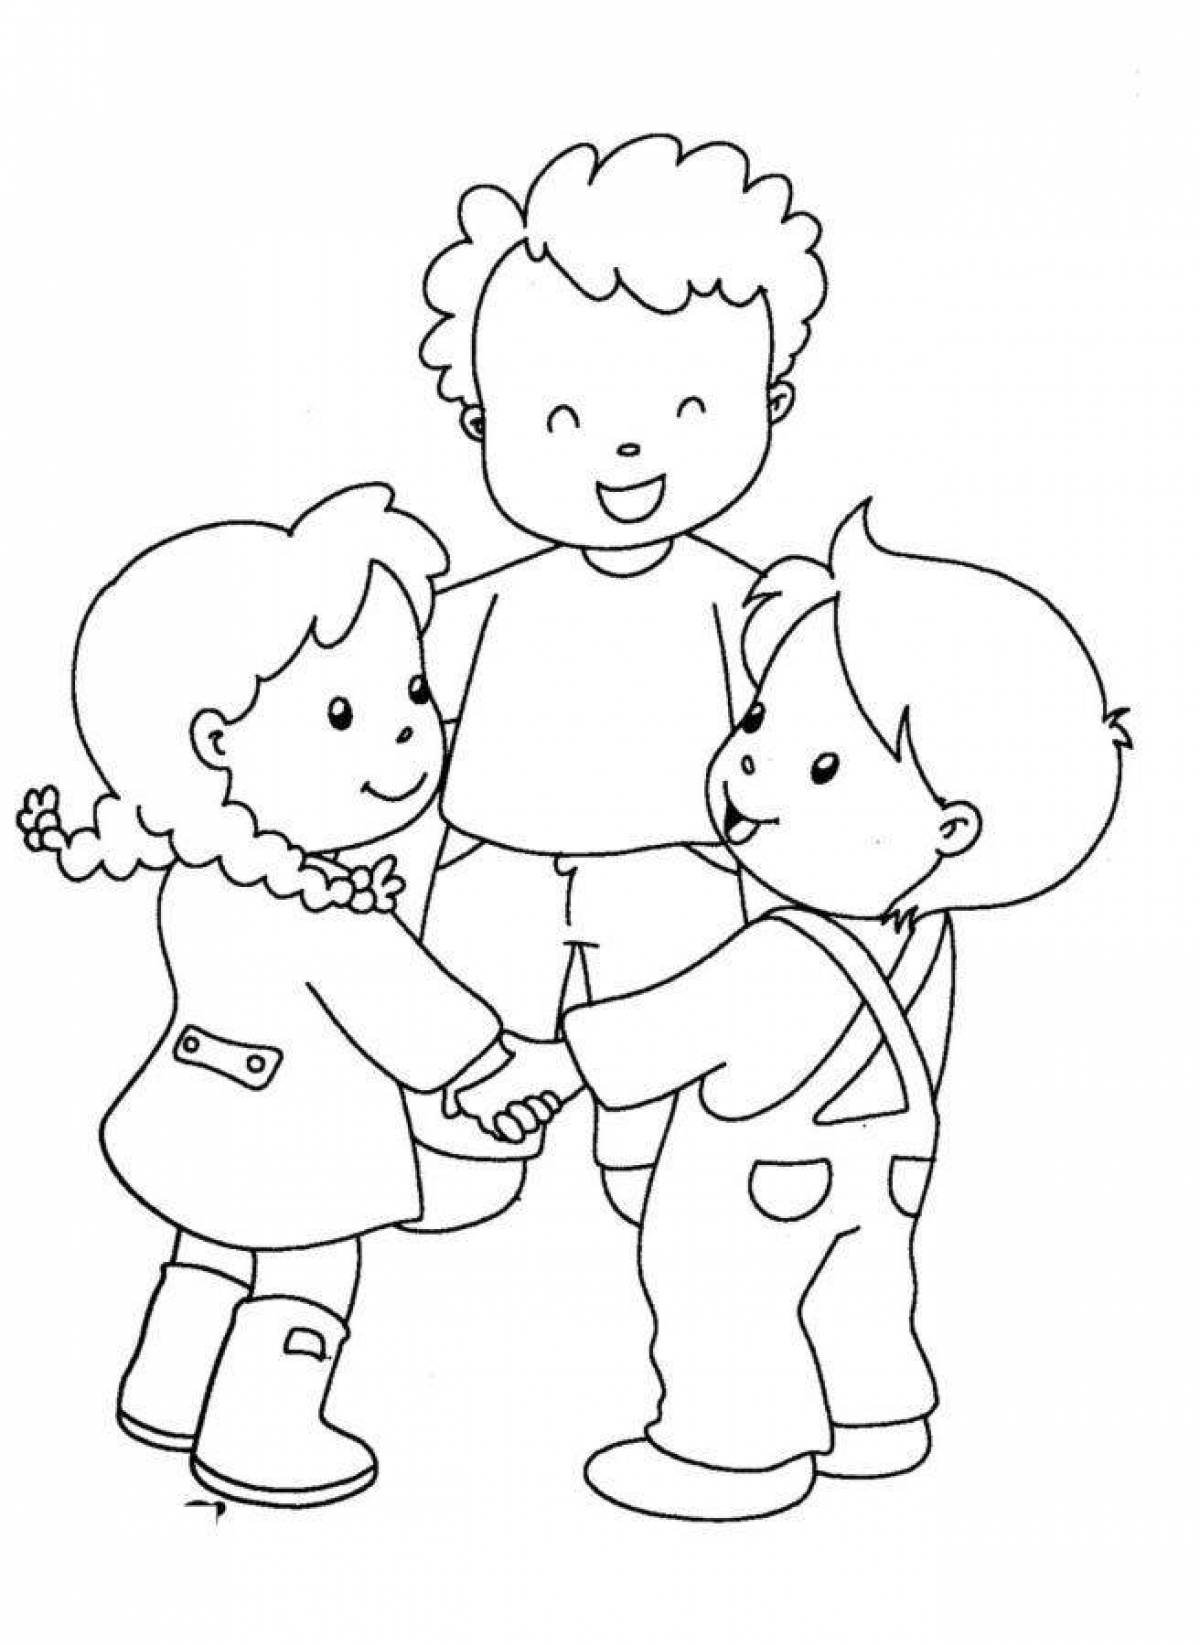 Joyfully magical children's friendship coloring book